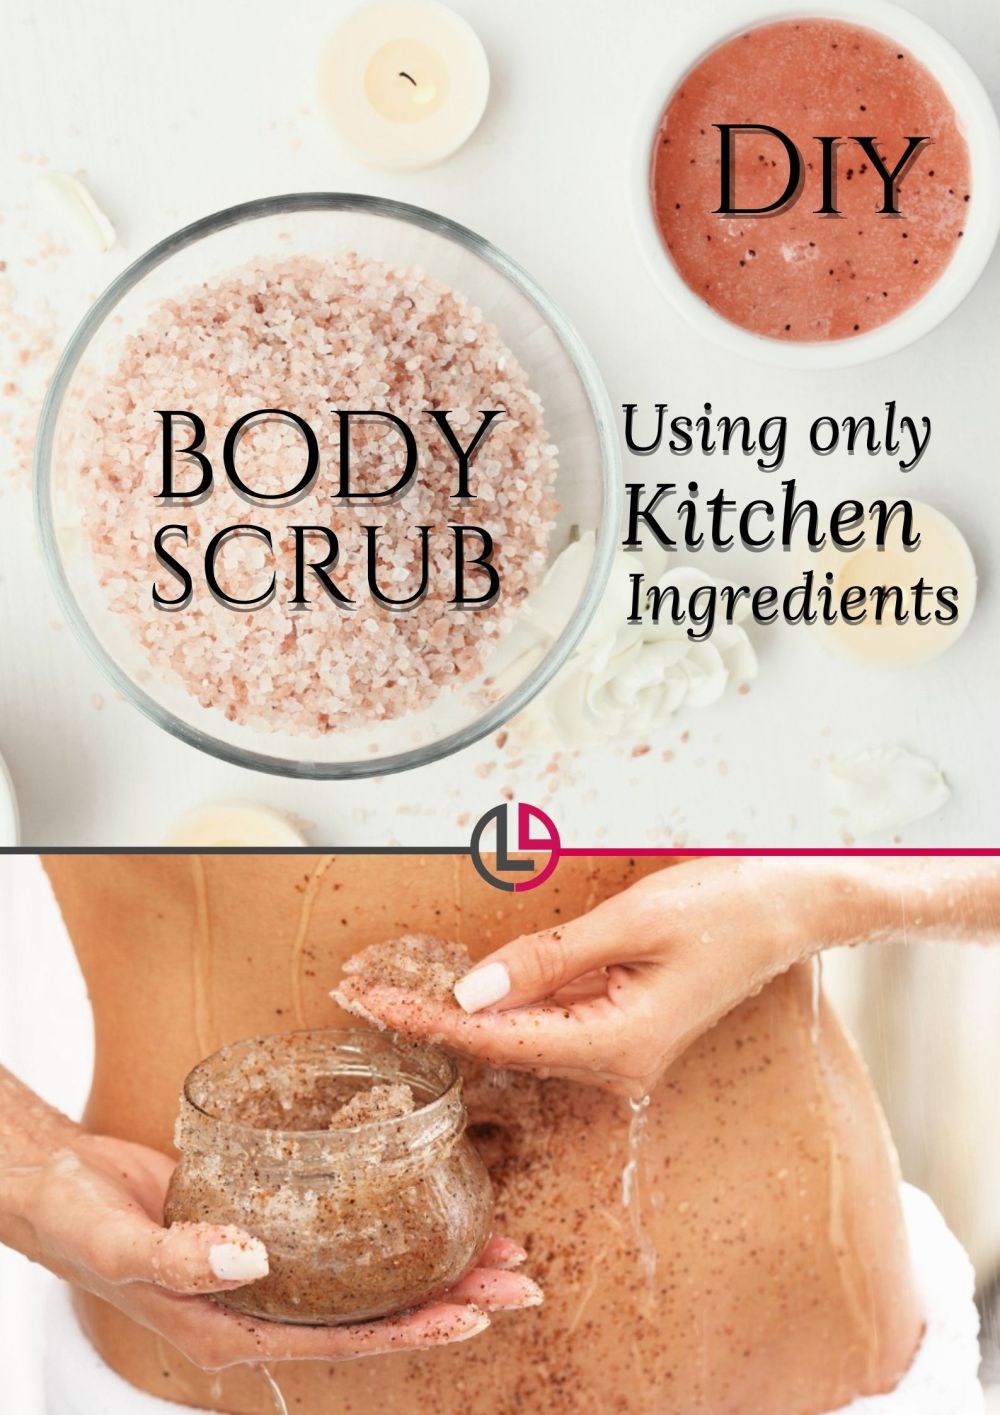 diy body srub with kitchen ingredients